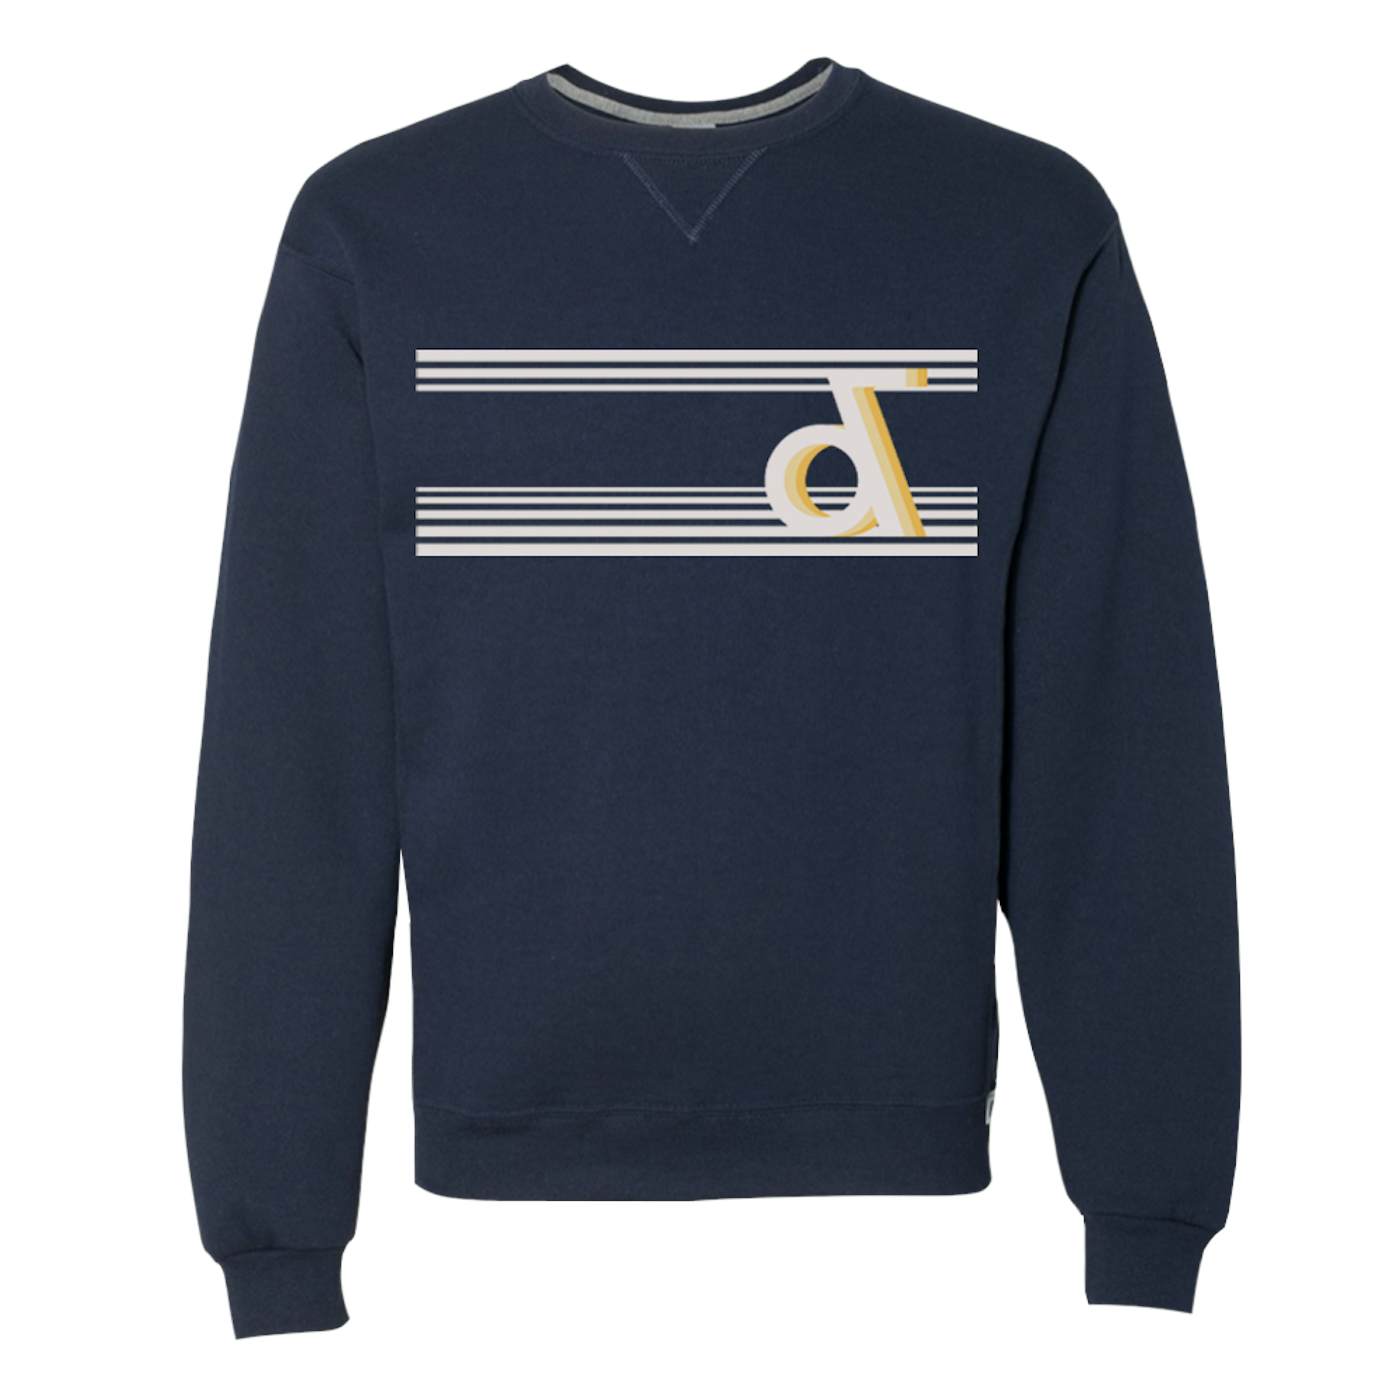 Aly & AJ 'Ampersand' Navy Crewneck Sweatshirt